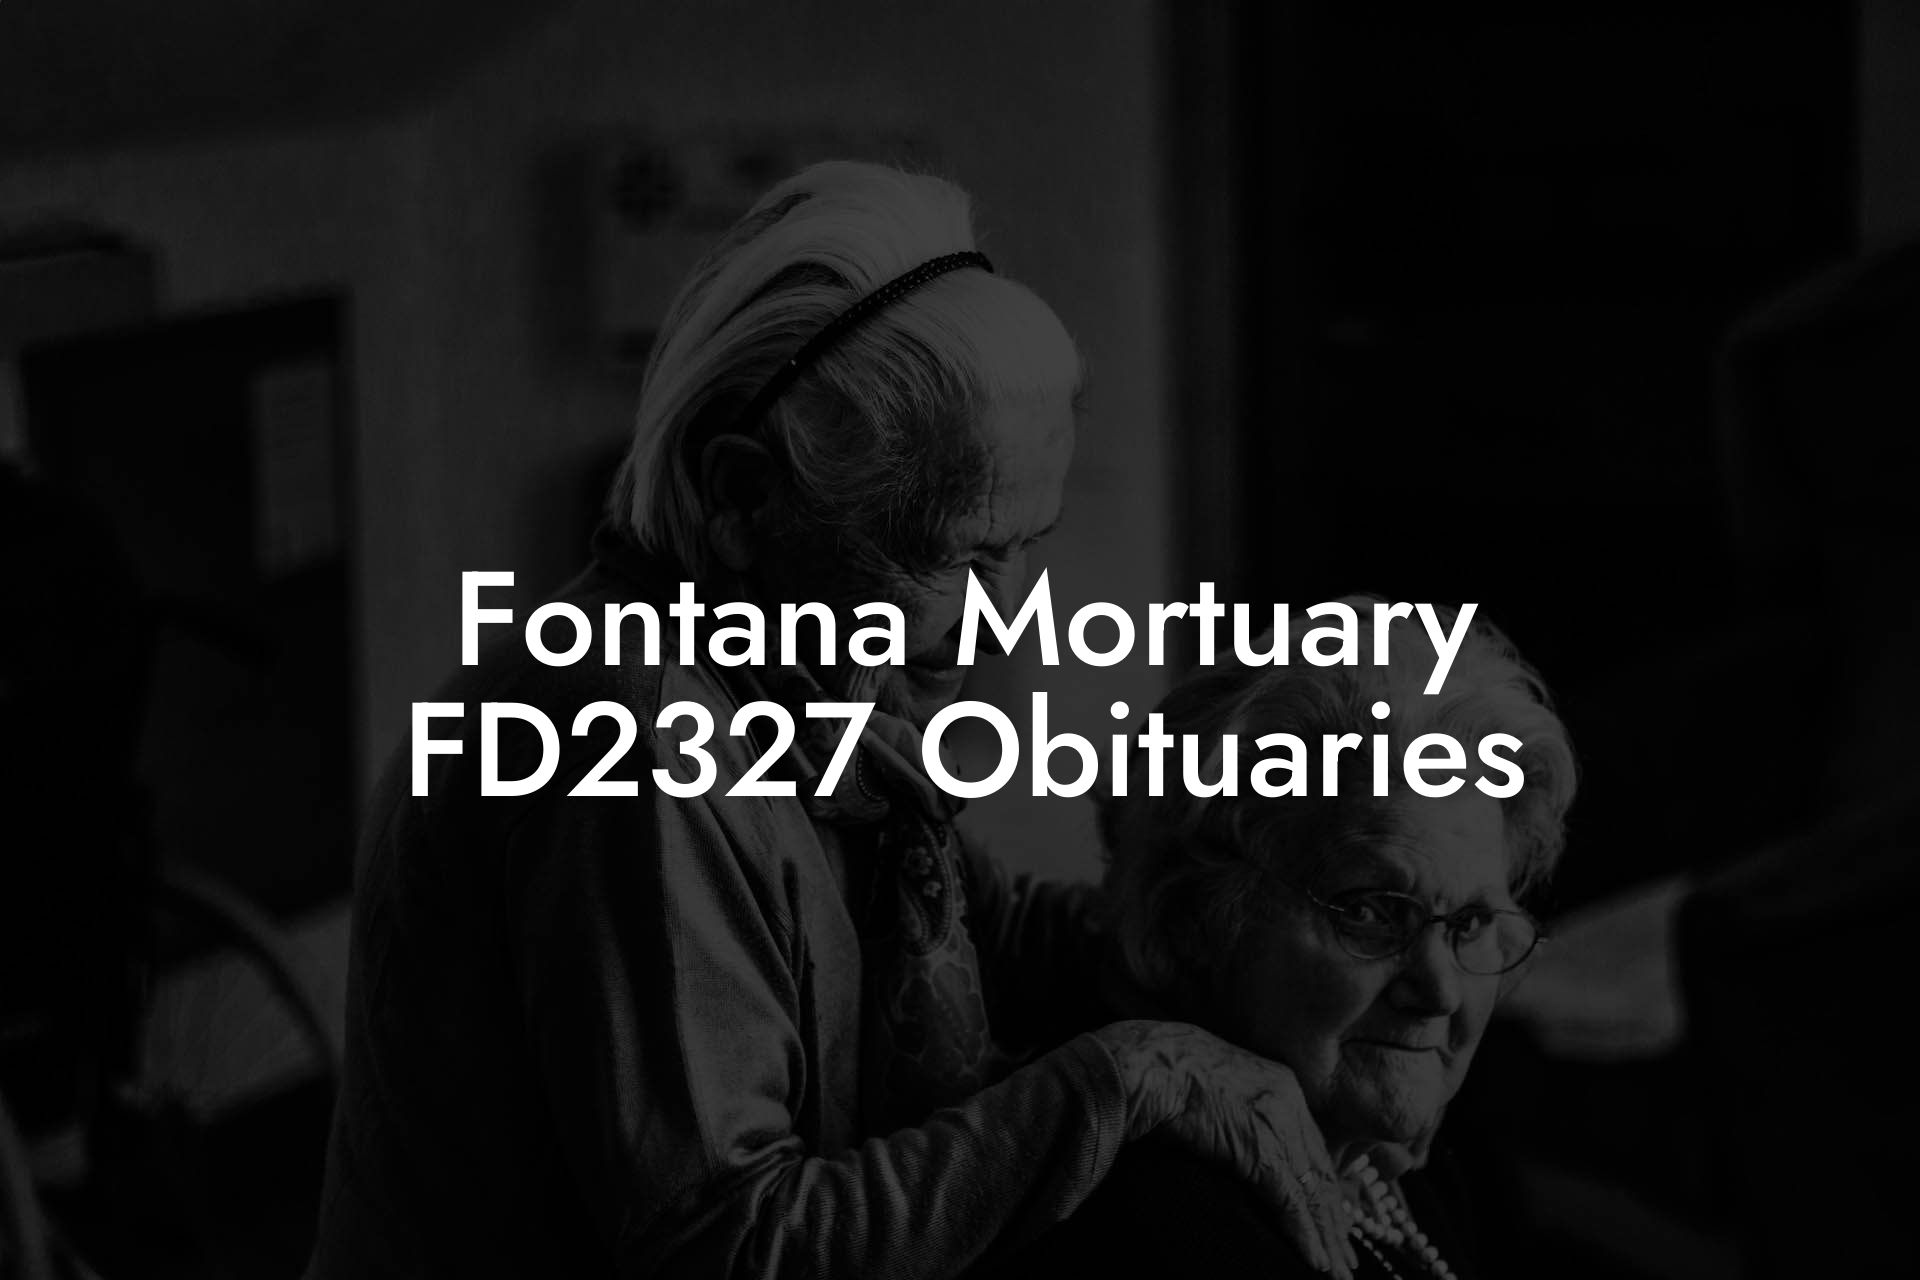 Fontana Mortuary FD2327 Obituaries